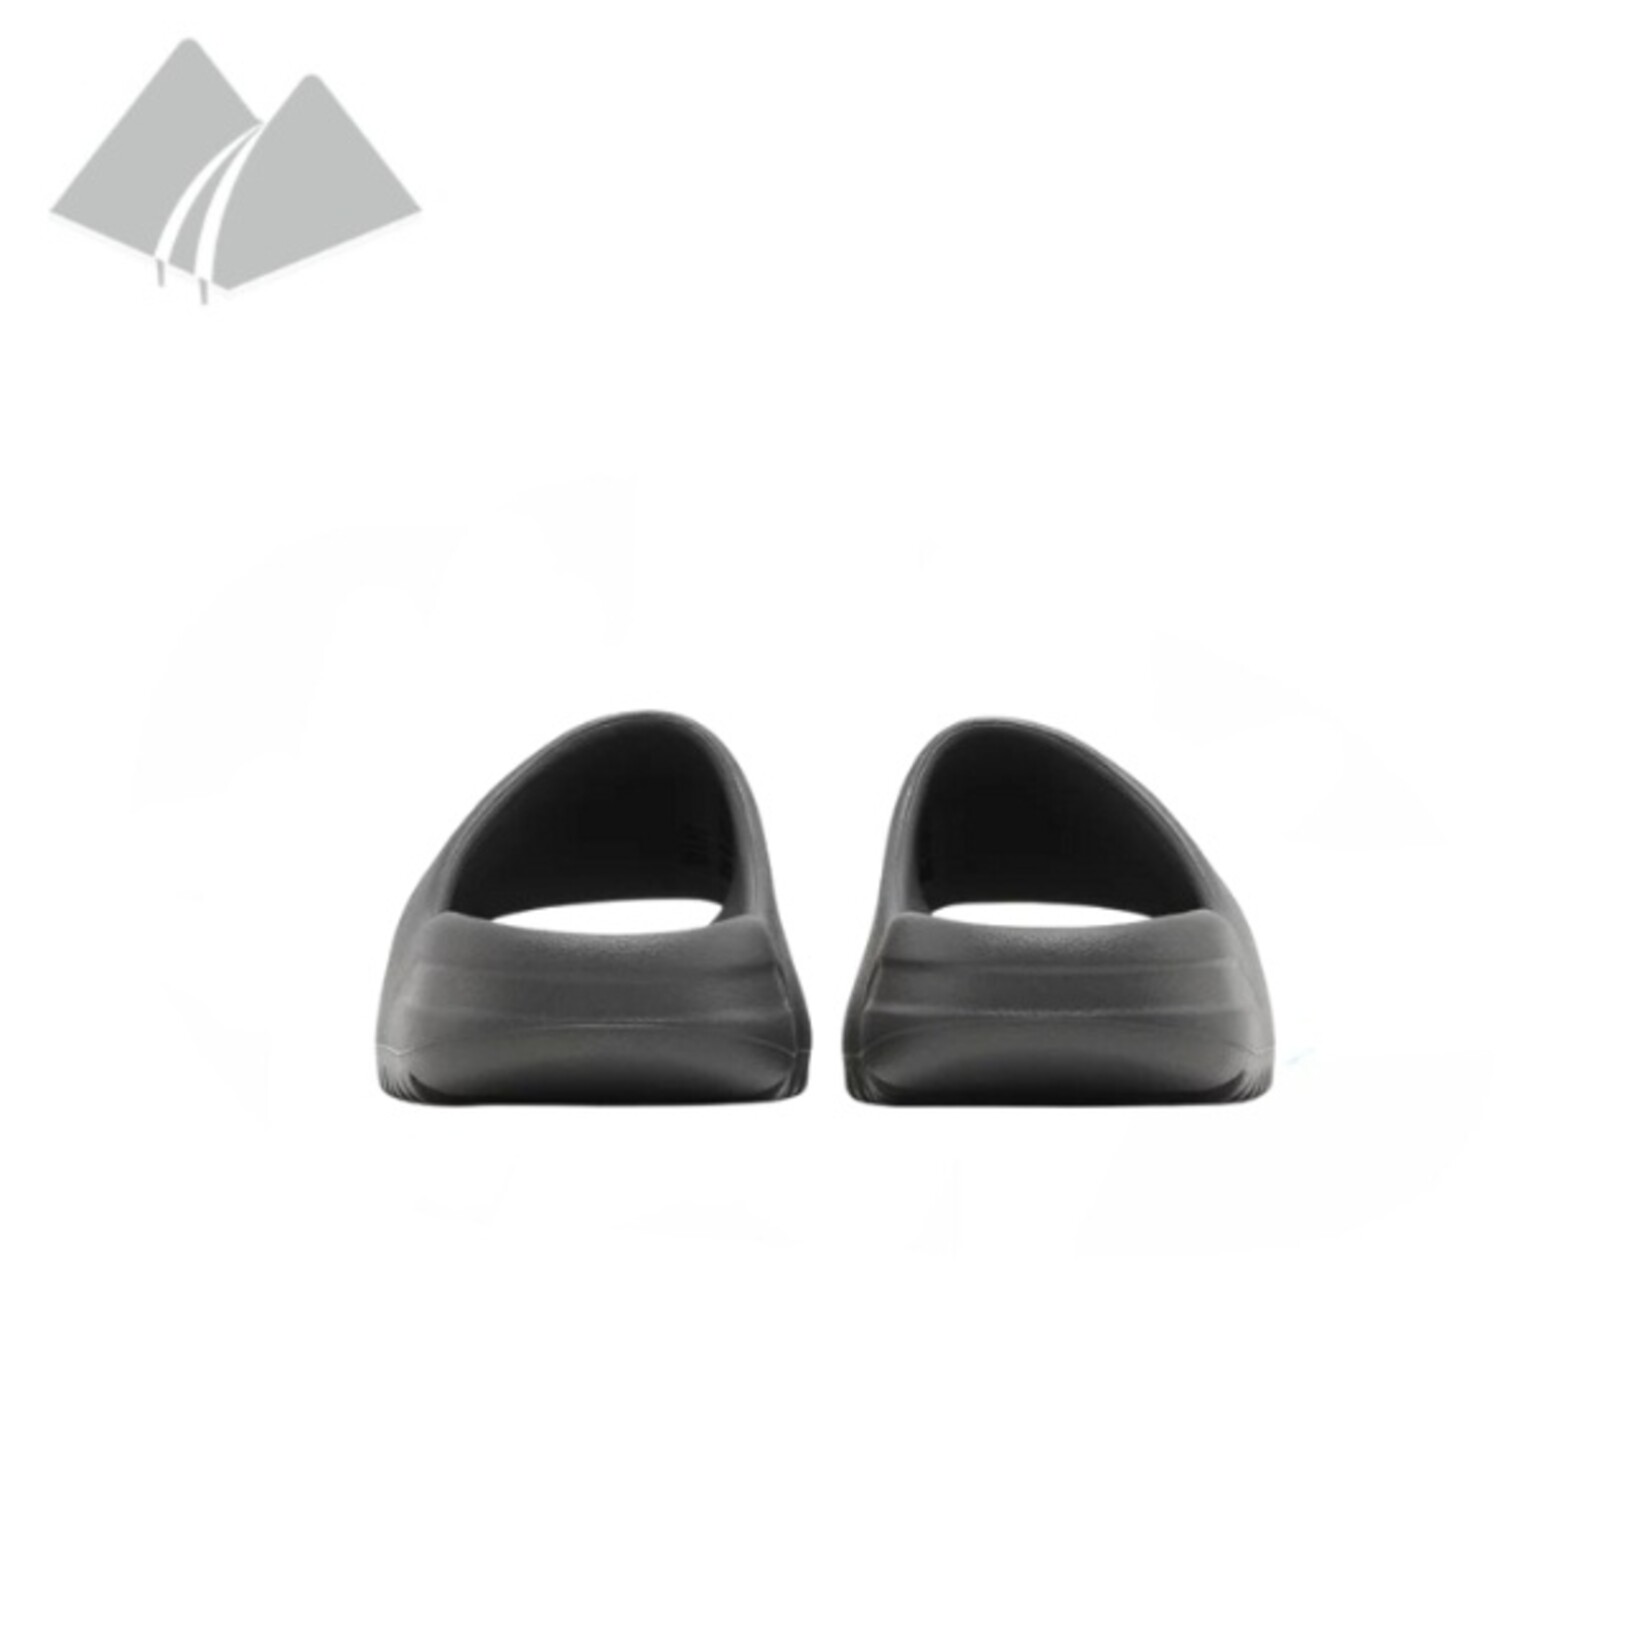 Adidas Adidas Yeezy Slide (M) Granite